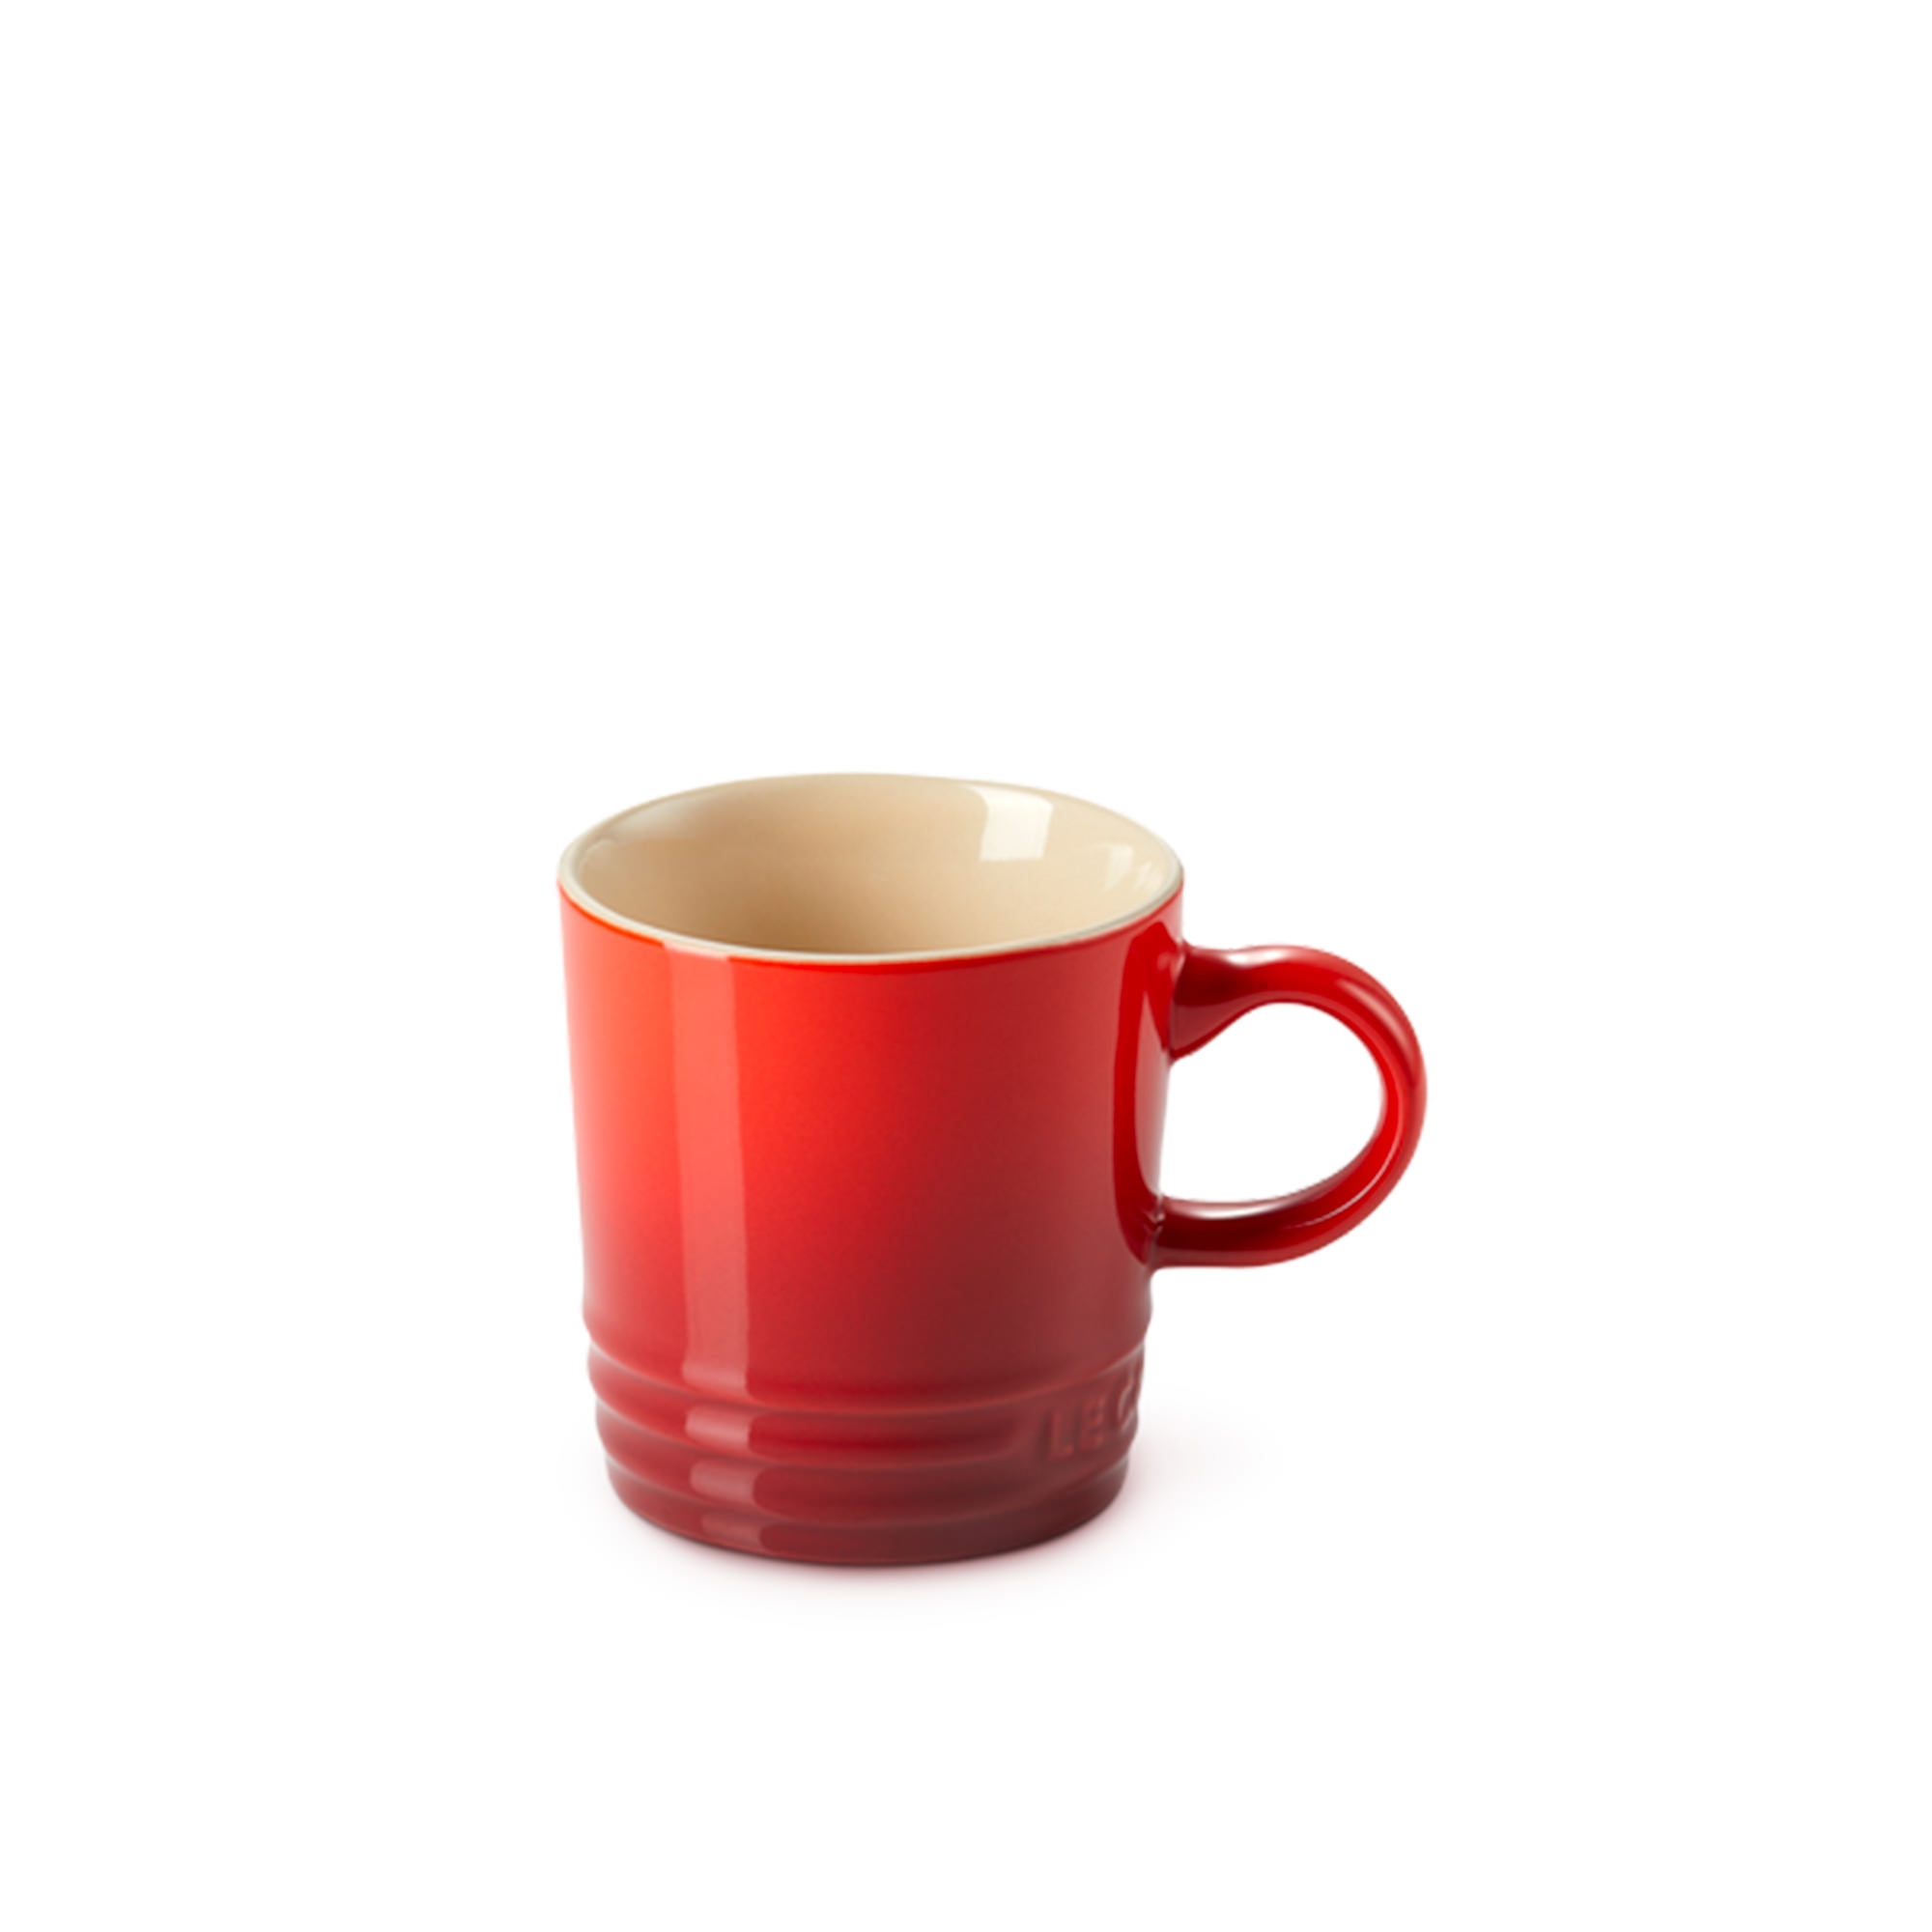 Le Creuset Stoneware Espresso Mug 100ml Cerise Image 2